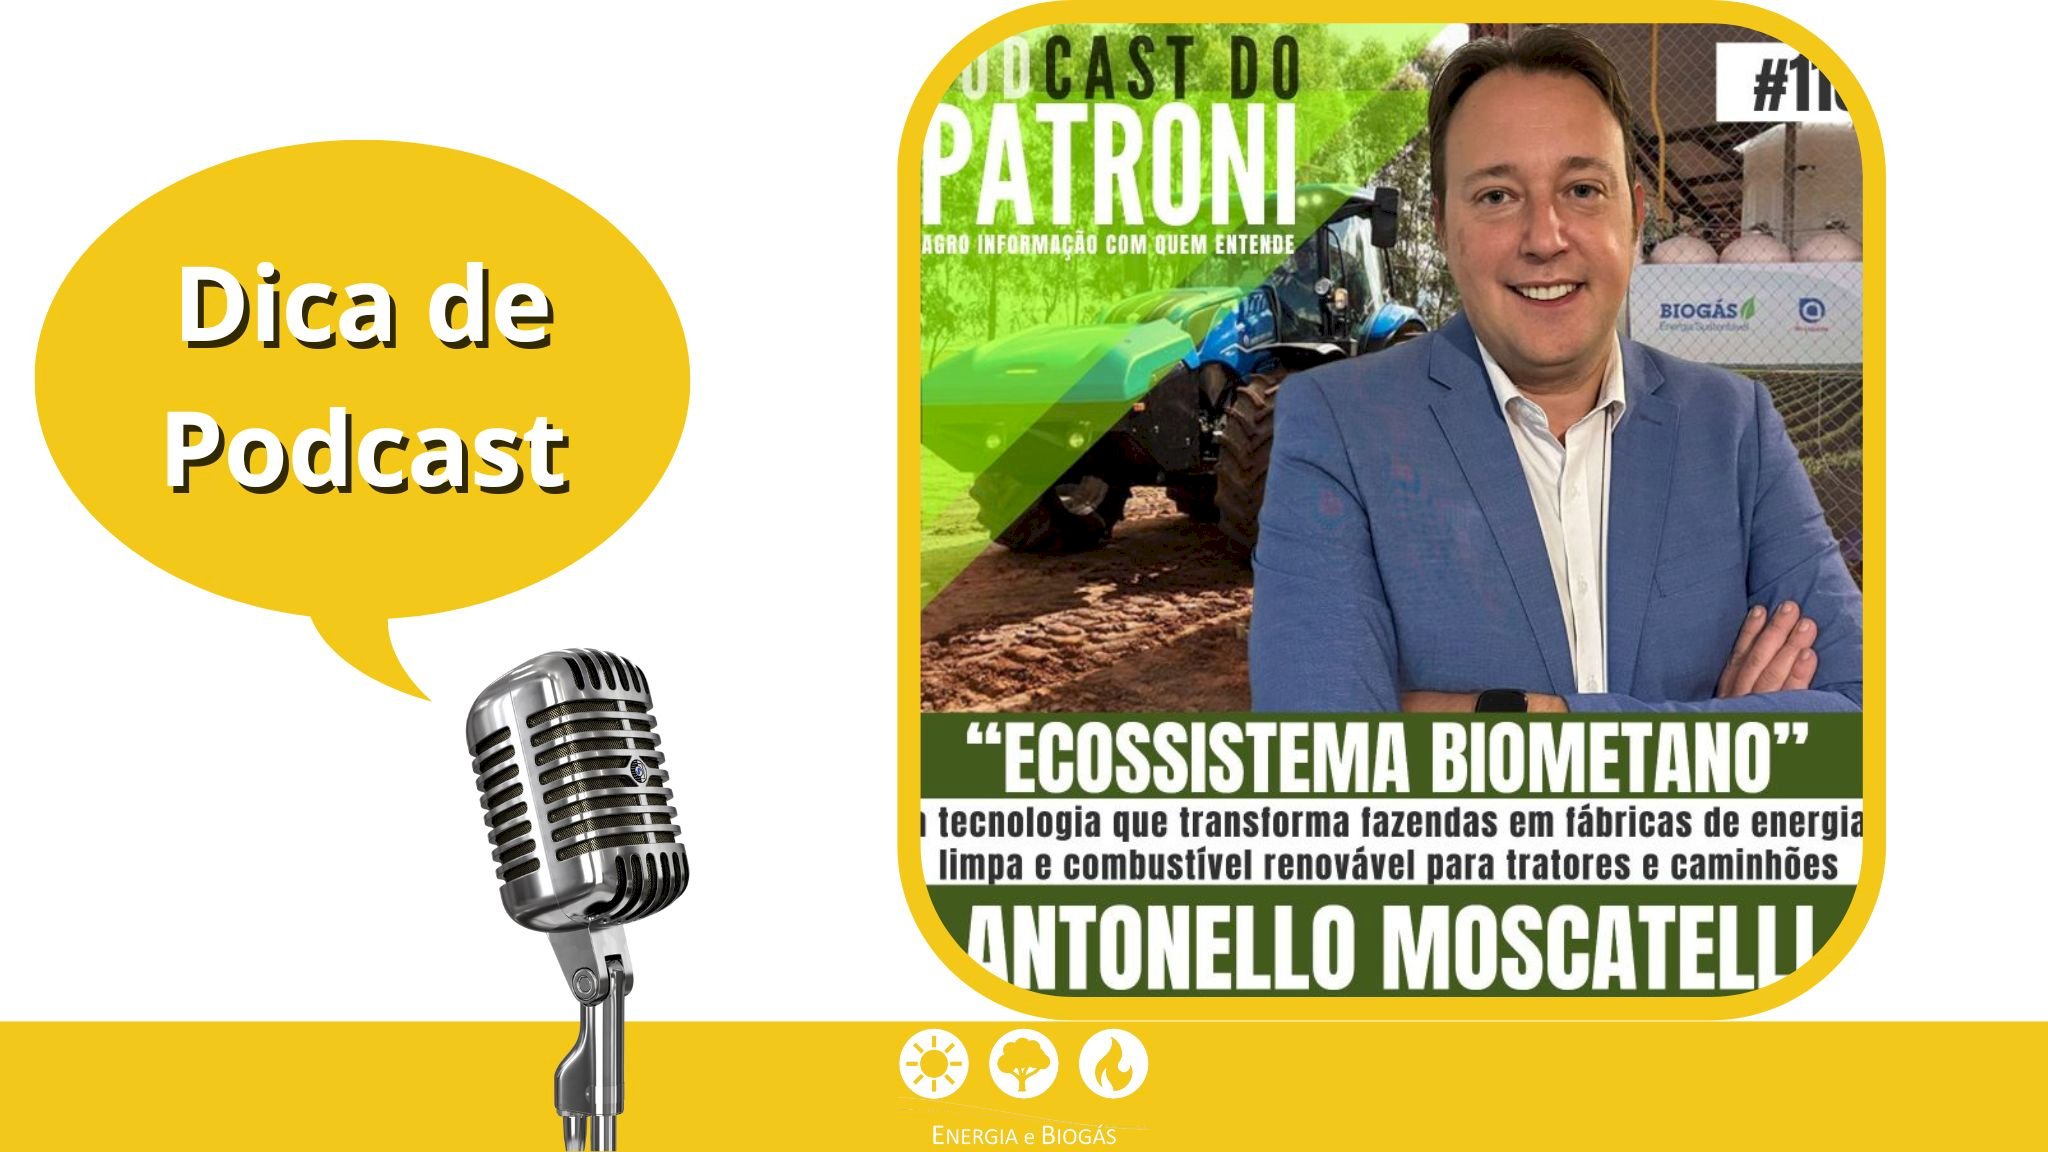 Podcast do Patroni - Episódio 116 Ecossistema biometano